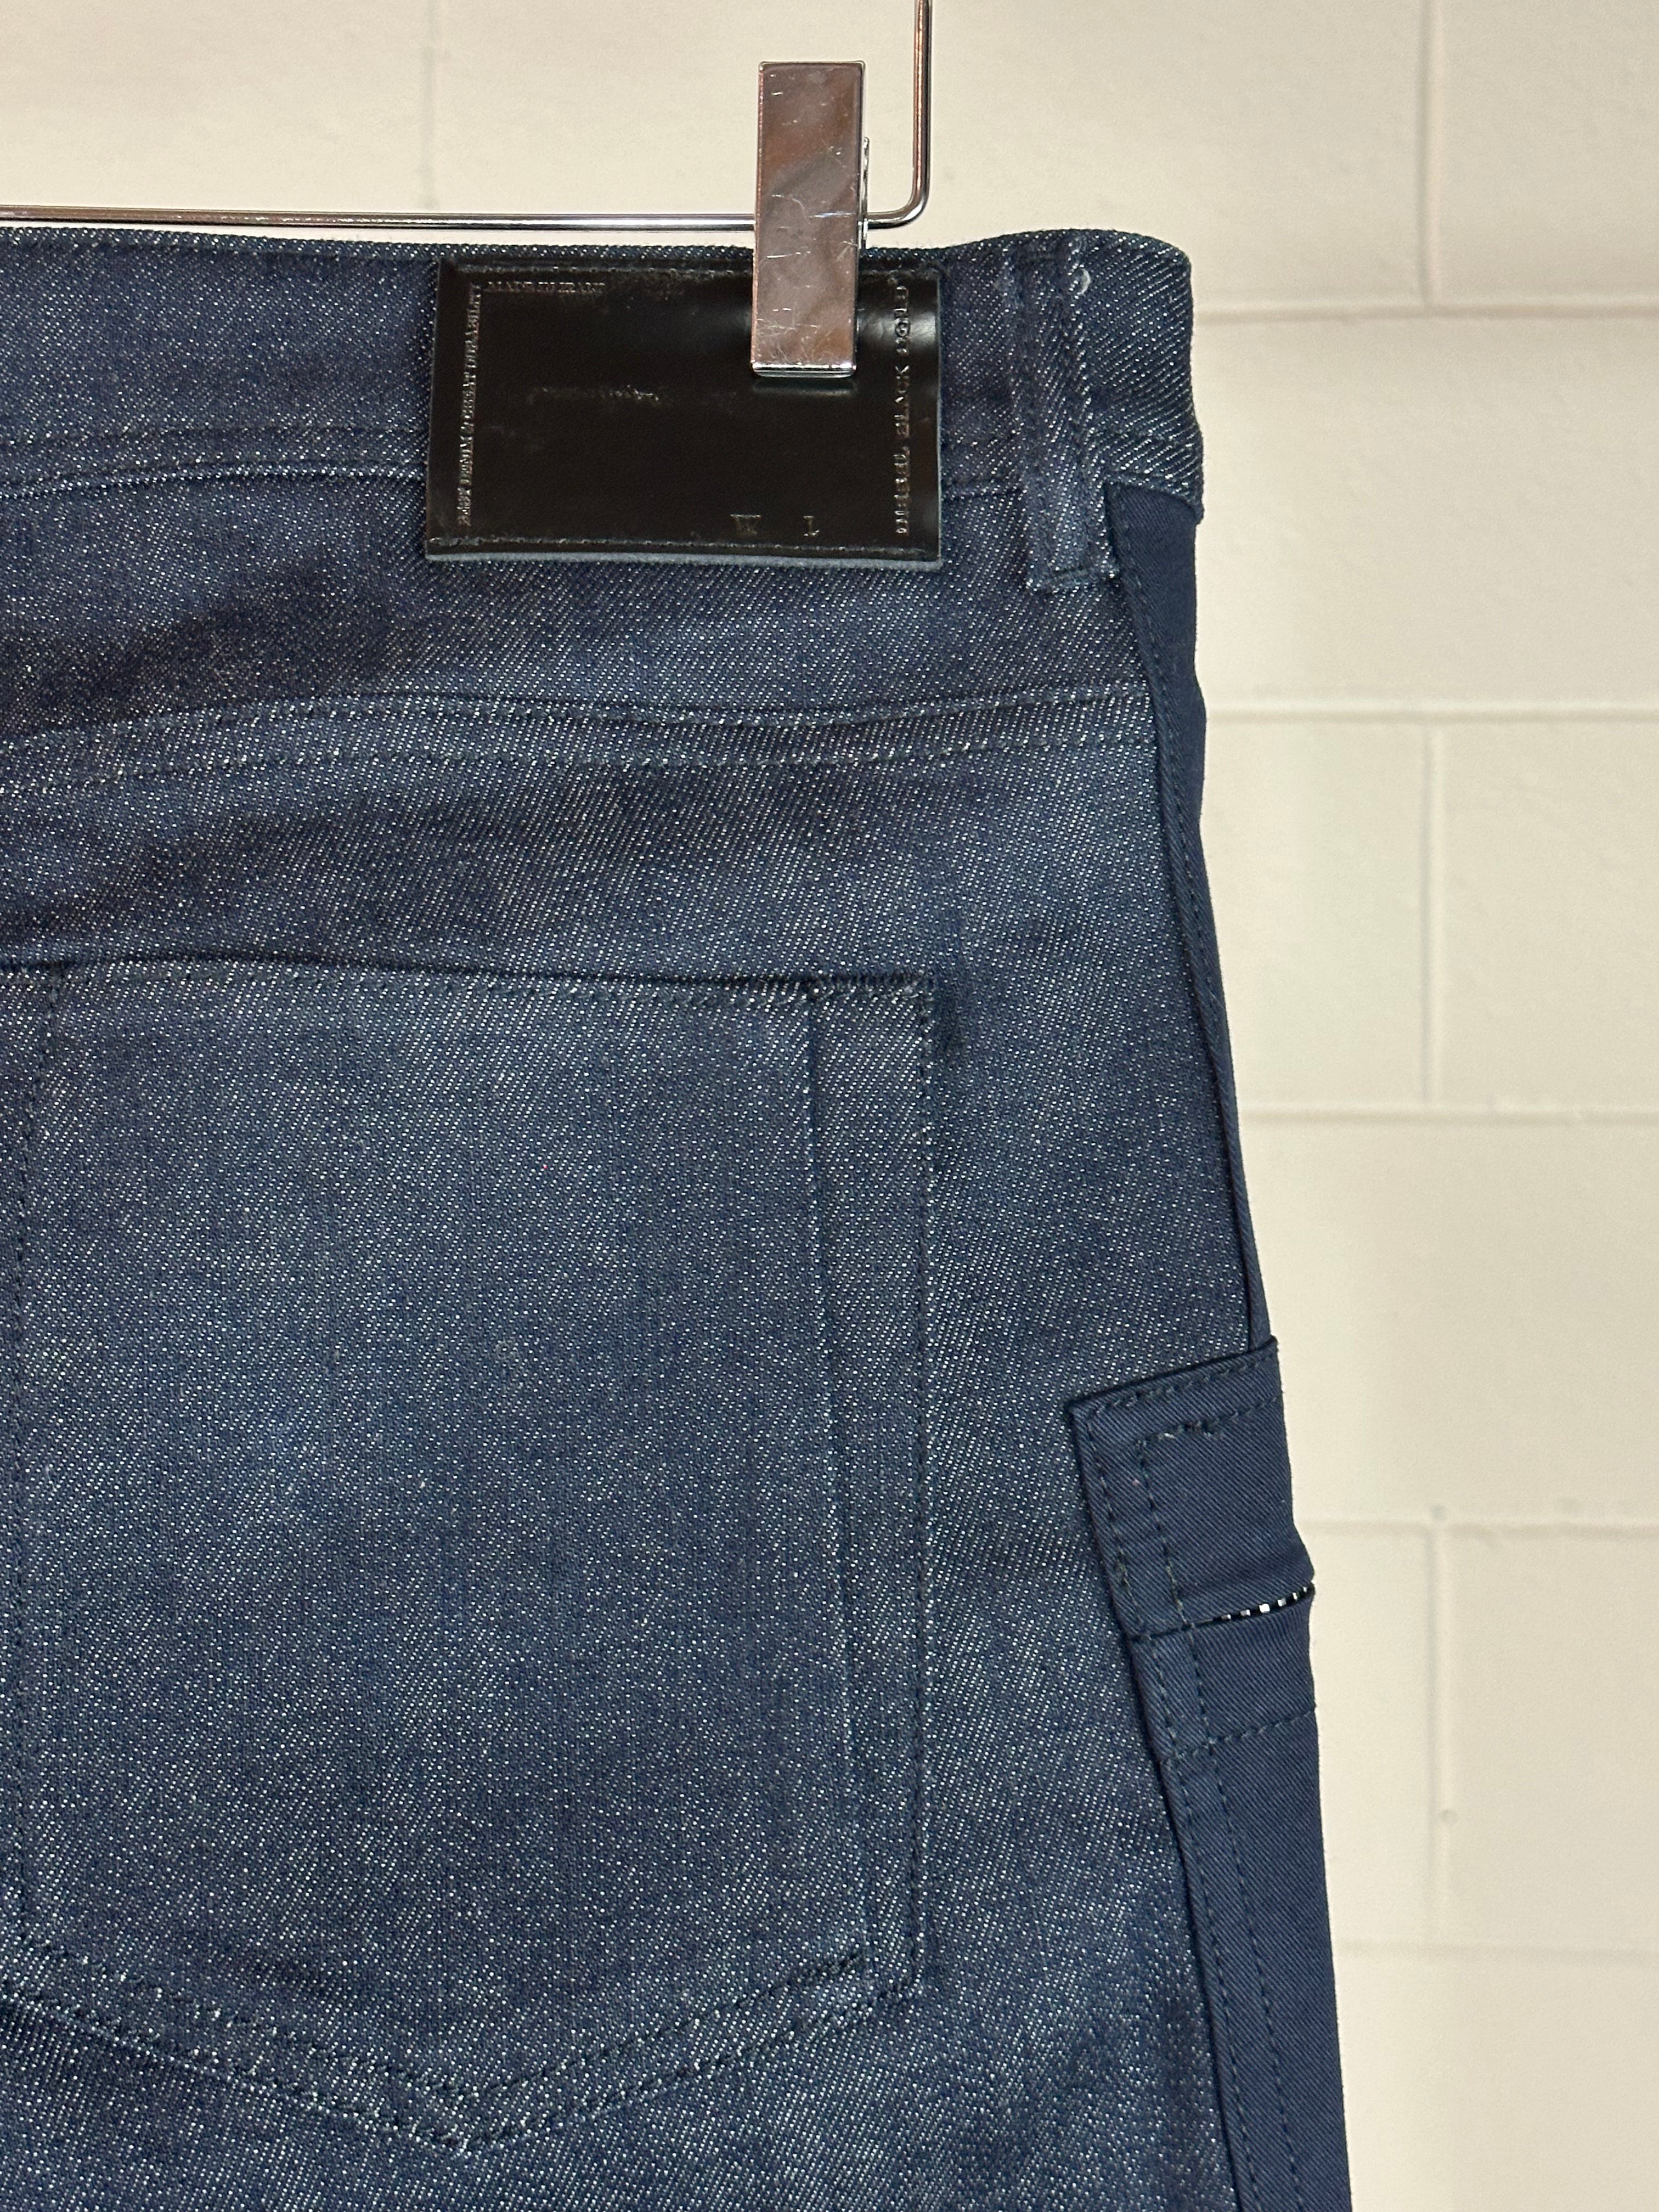 Dark Blue Pockets Jeans